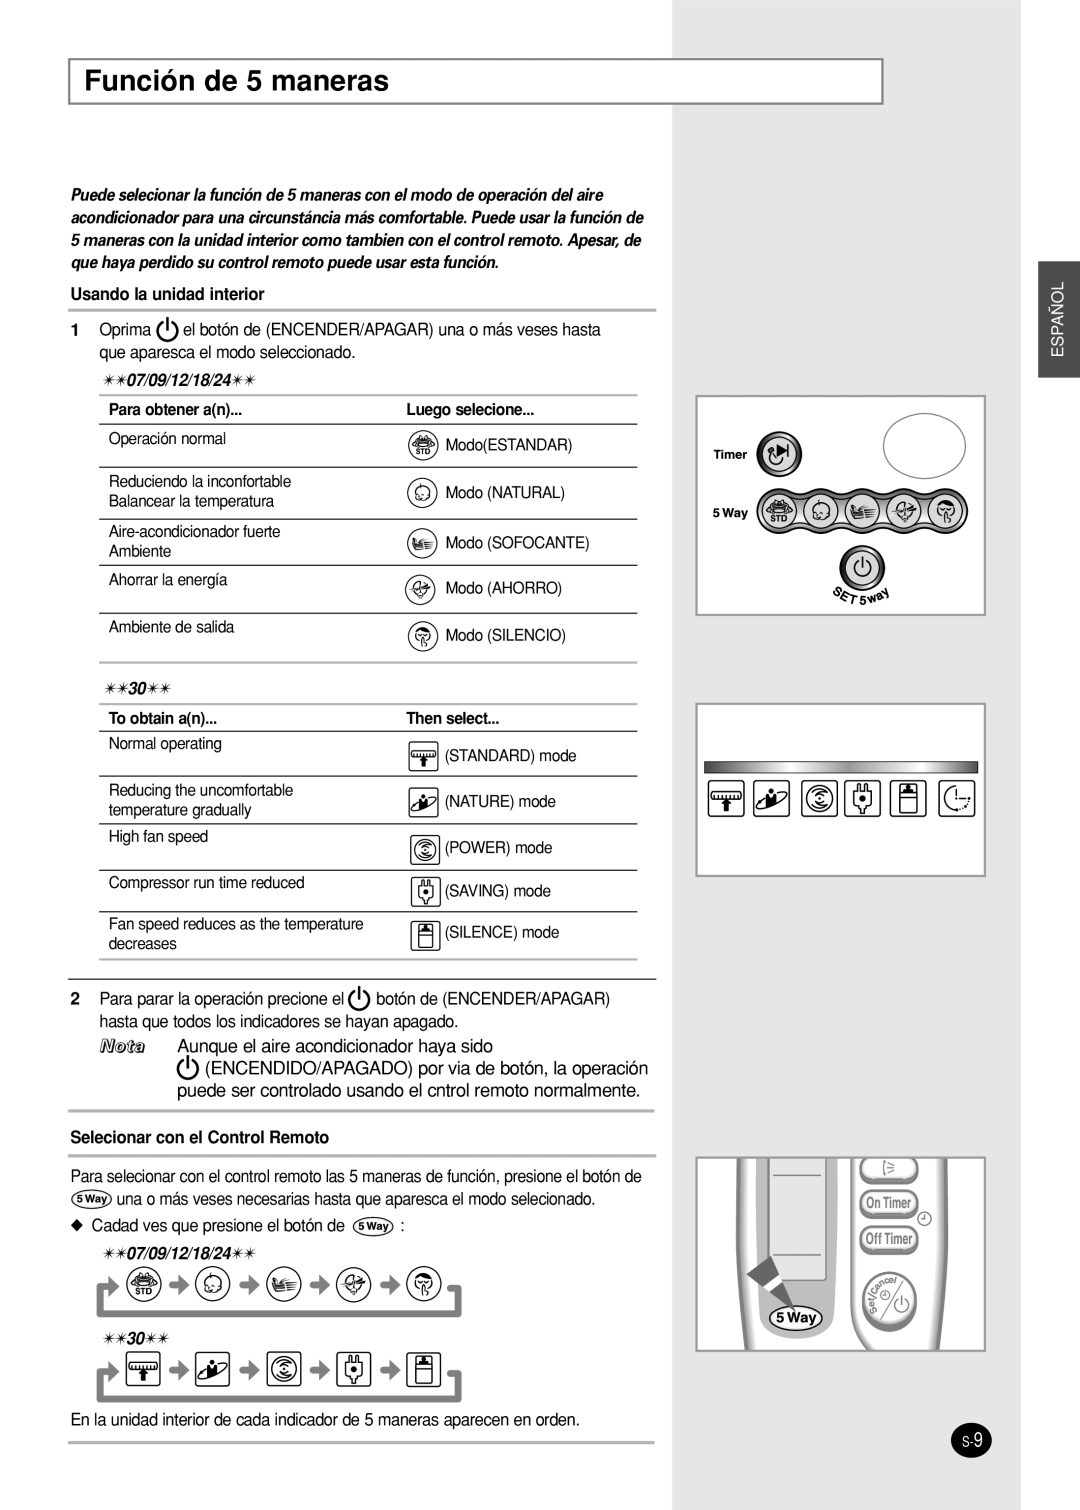 Samsung AS24A1(2)RC Usando la unidad interior, 07/09/12/18/24, Para obtener an, Luego selecione, To obtain an, Then select 